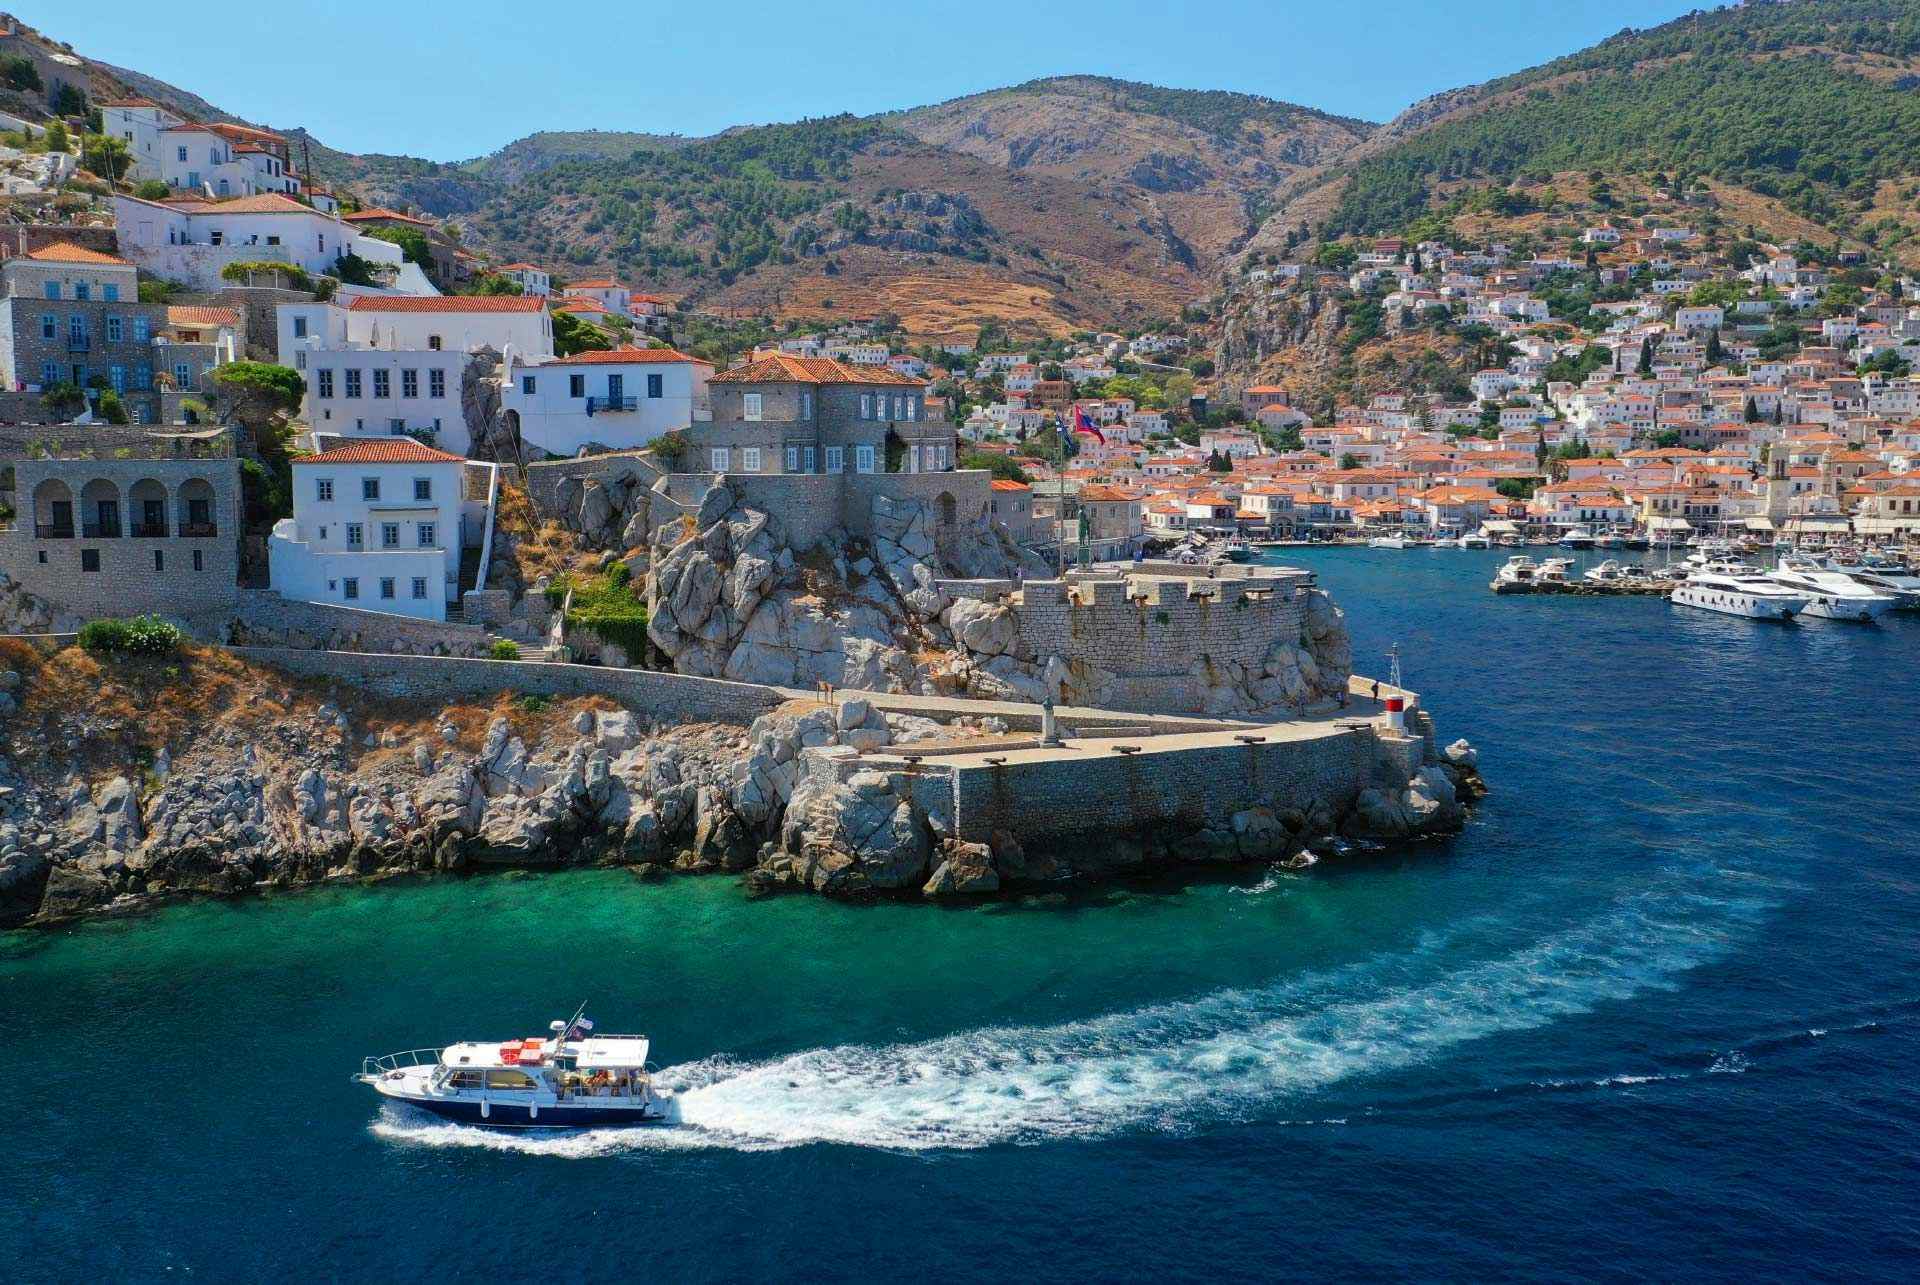 Hydra town in Greece